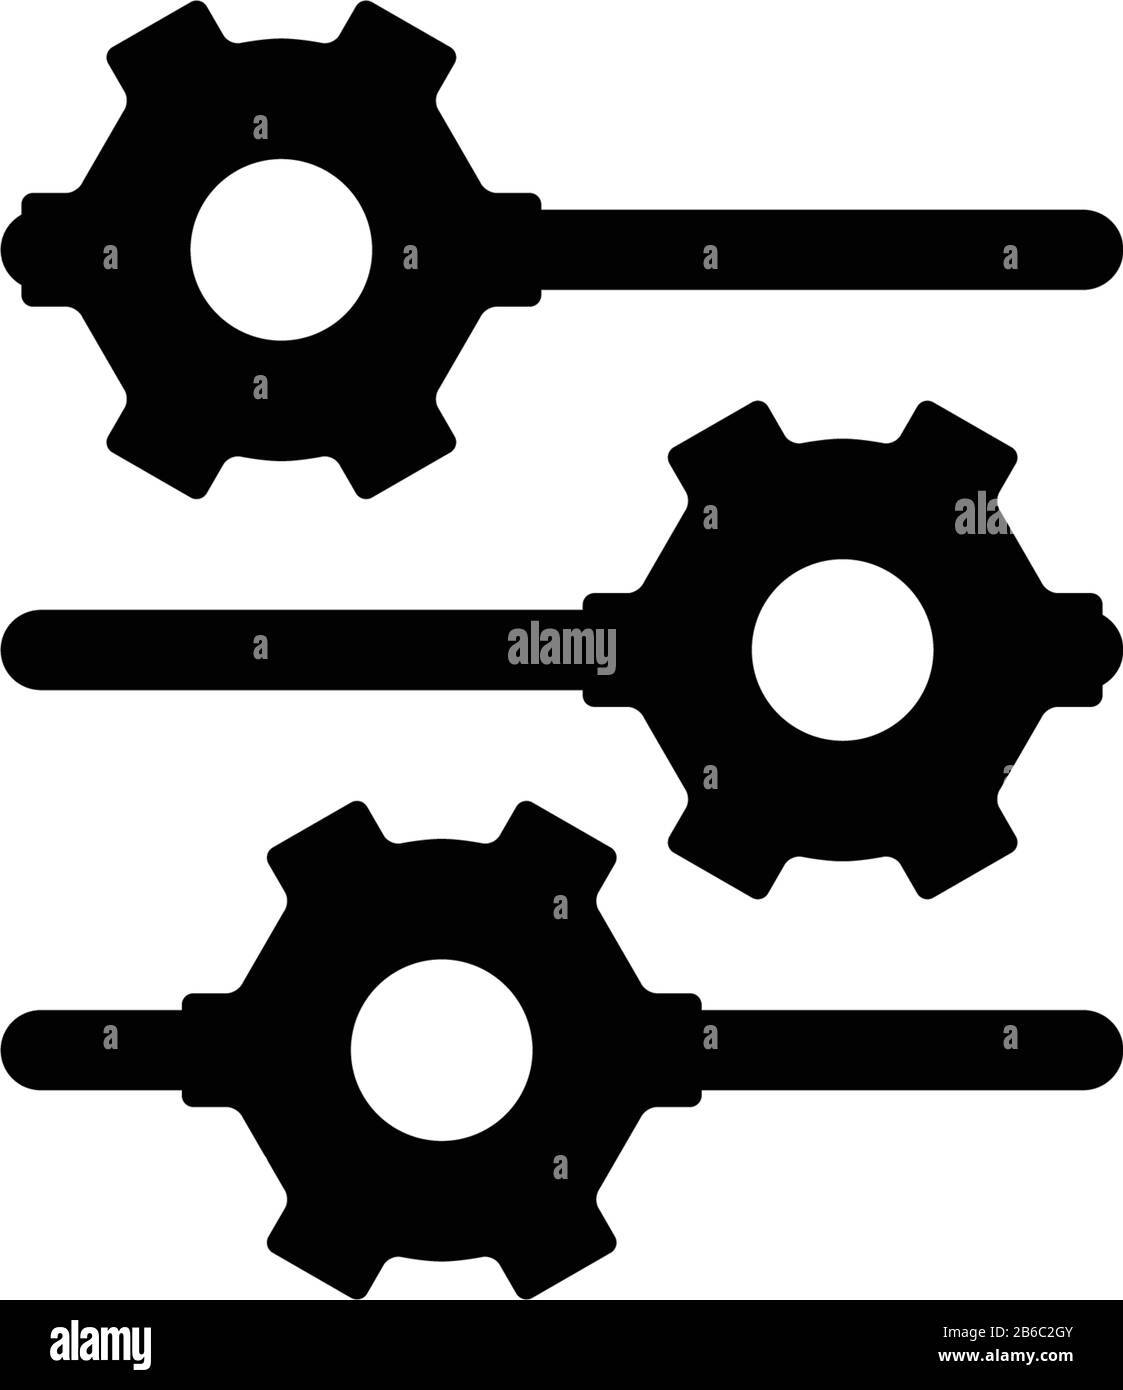 Three black gear wheels sliders on white background. Settings icon. Stock Vector illustration isolated on white background. Stock Vector